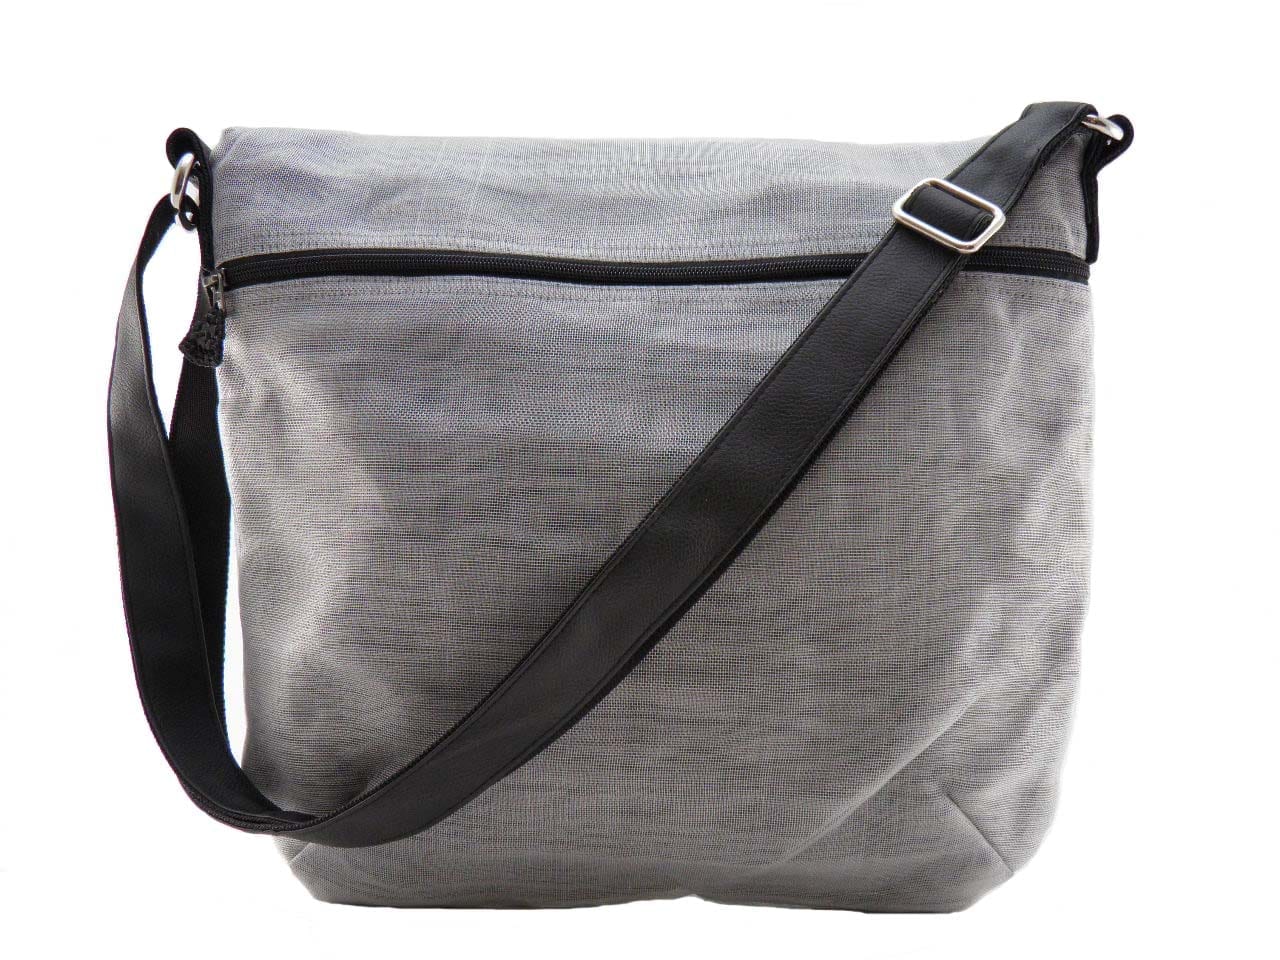 Scratch-net - Eco-friendly Shoulder bag | Ethic & chic